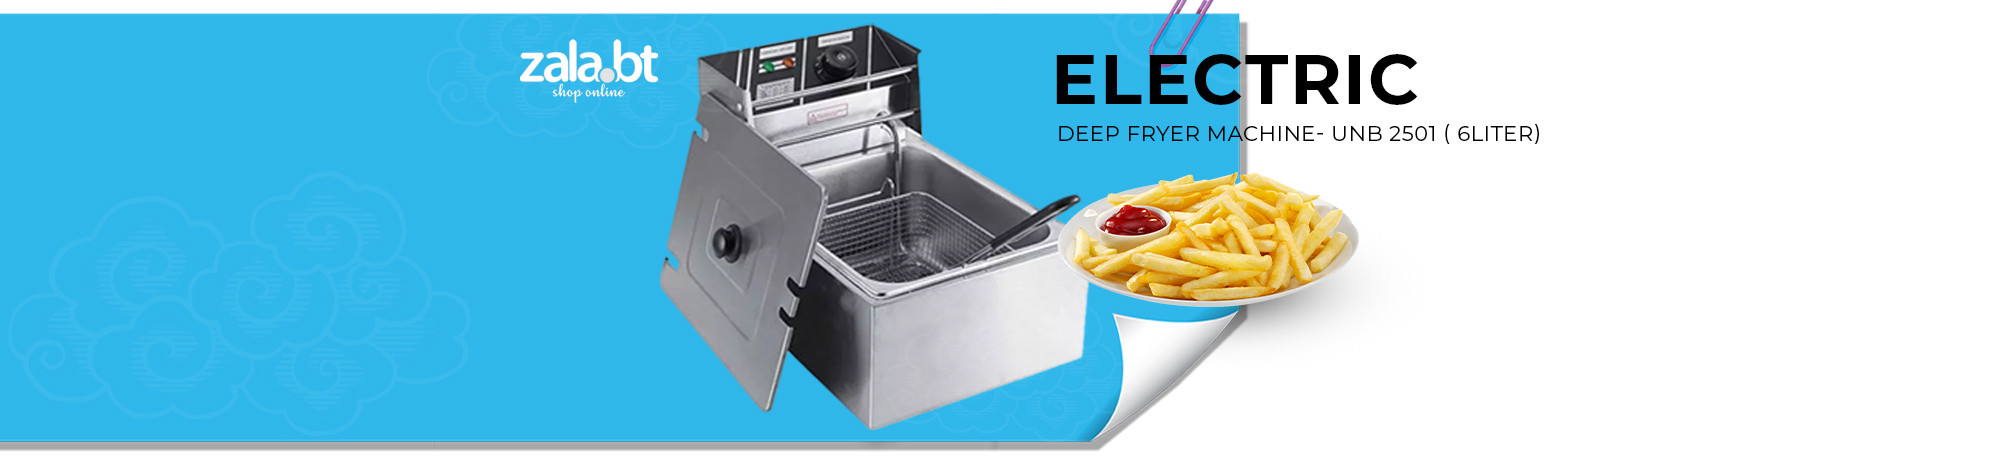 Electric Deep Fryer Machine